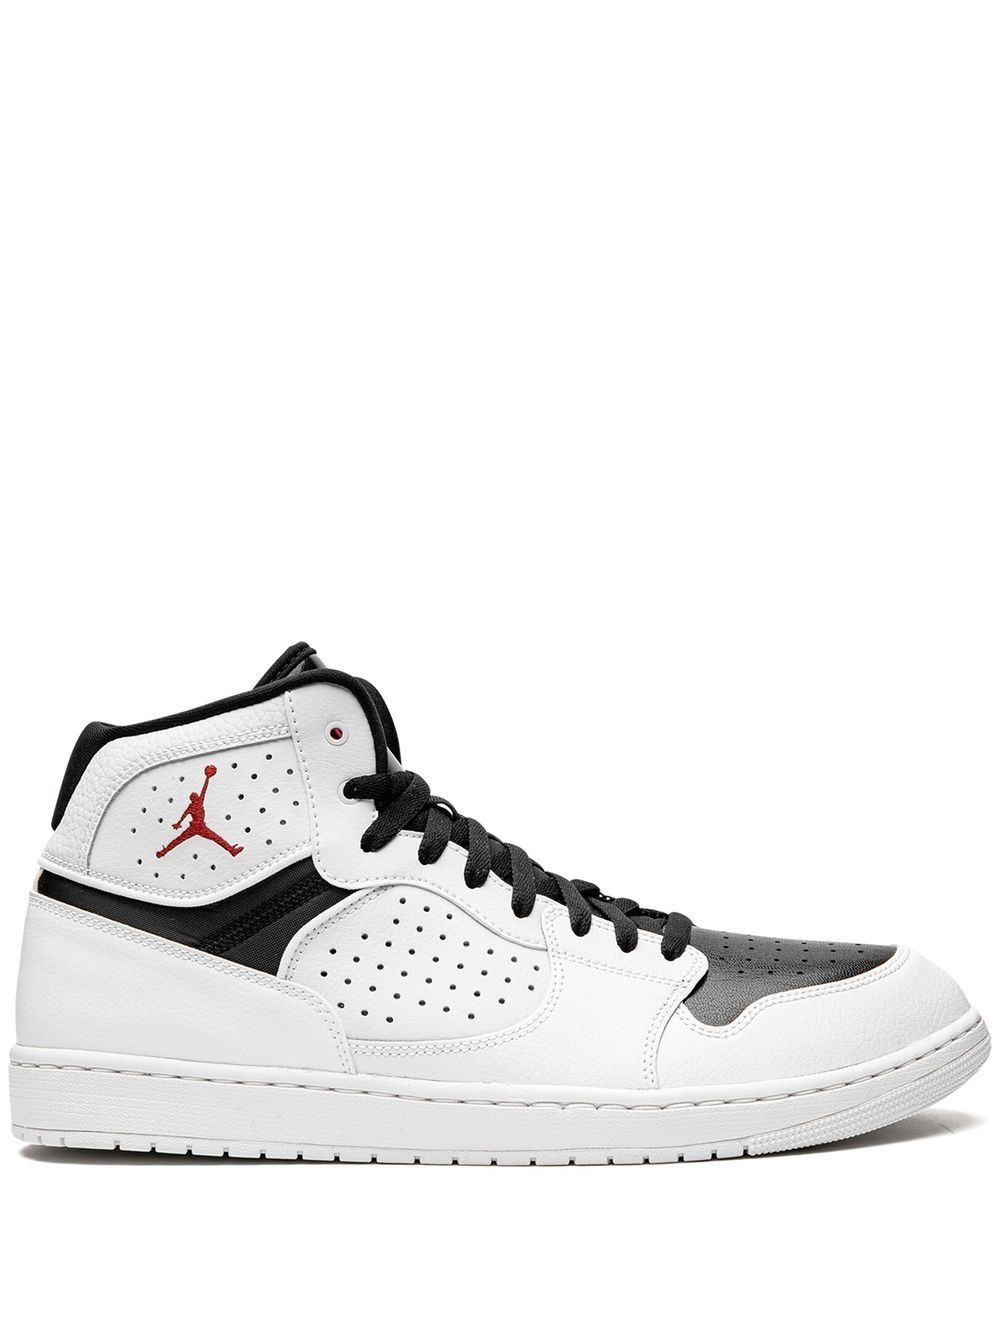 Jordan Jordan Access sneakers - White von Jordan